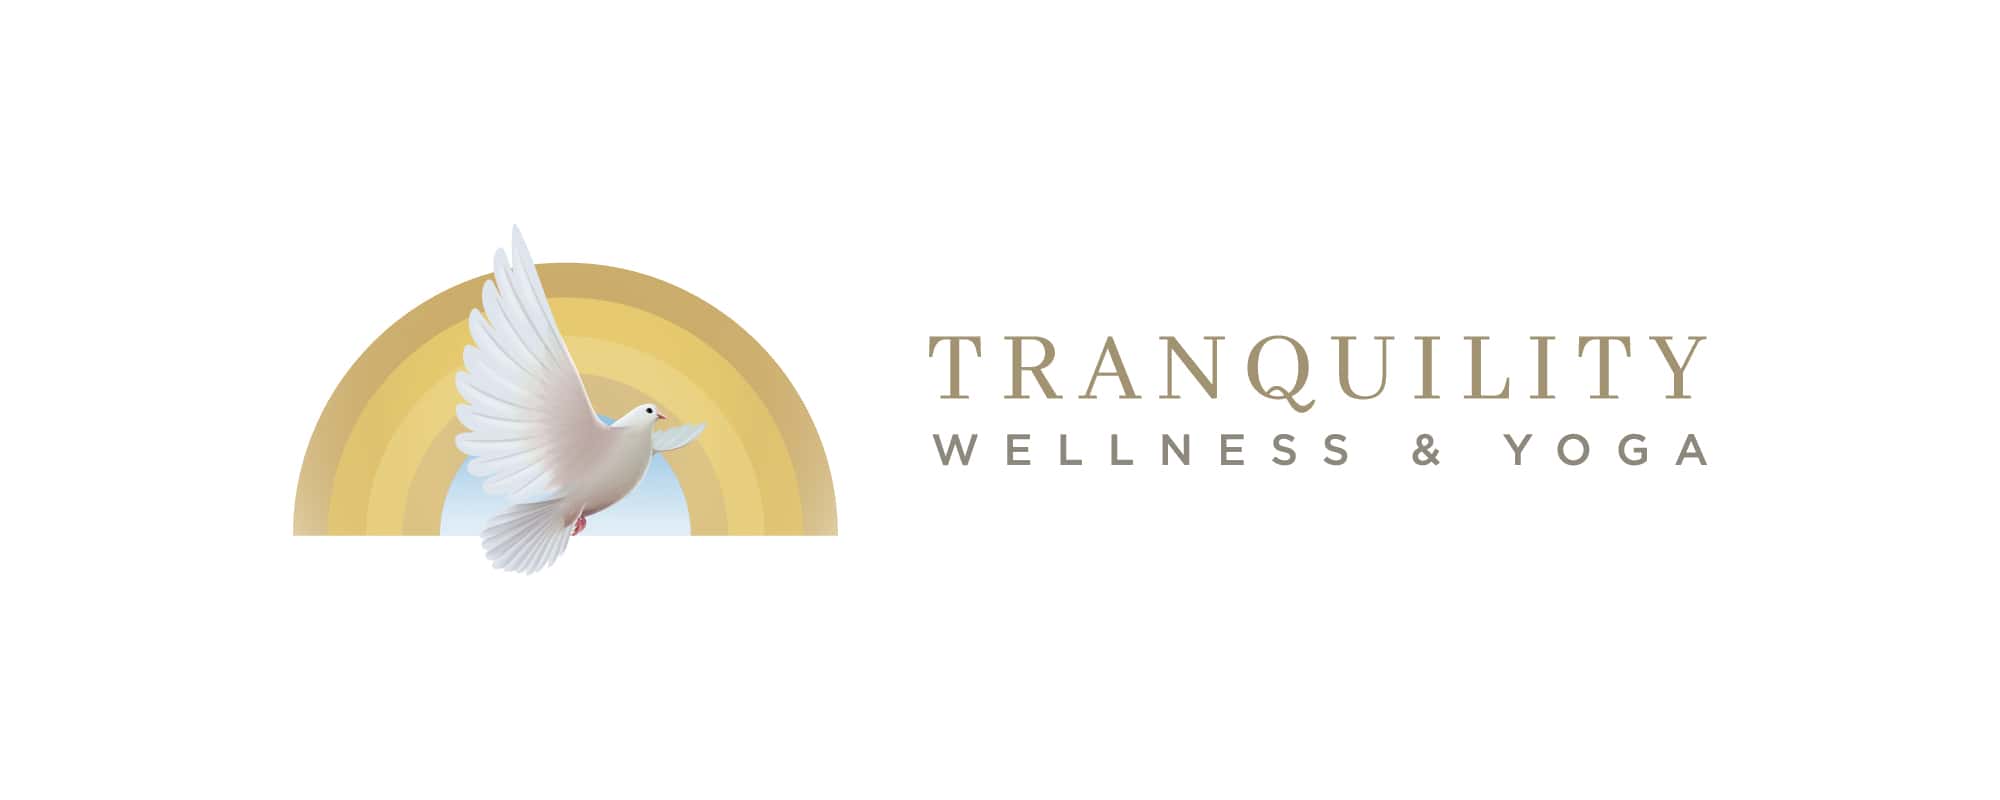 Tranquility Wellness & Yoga